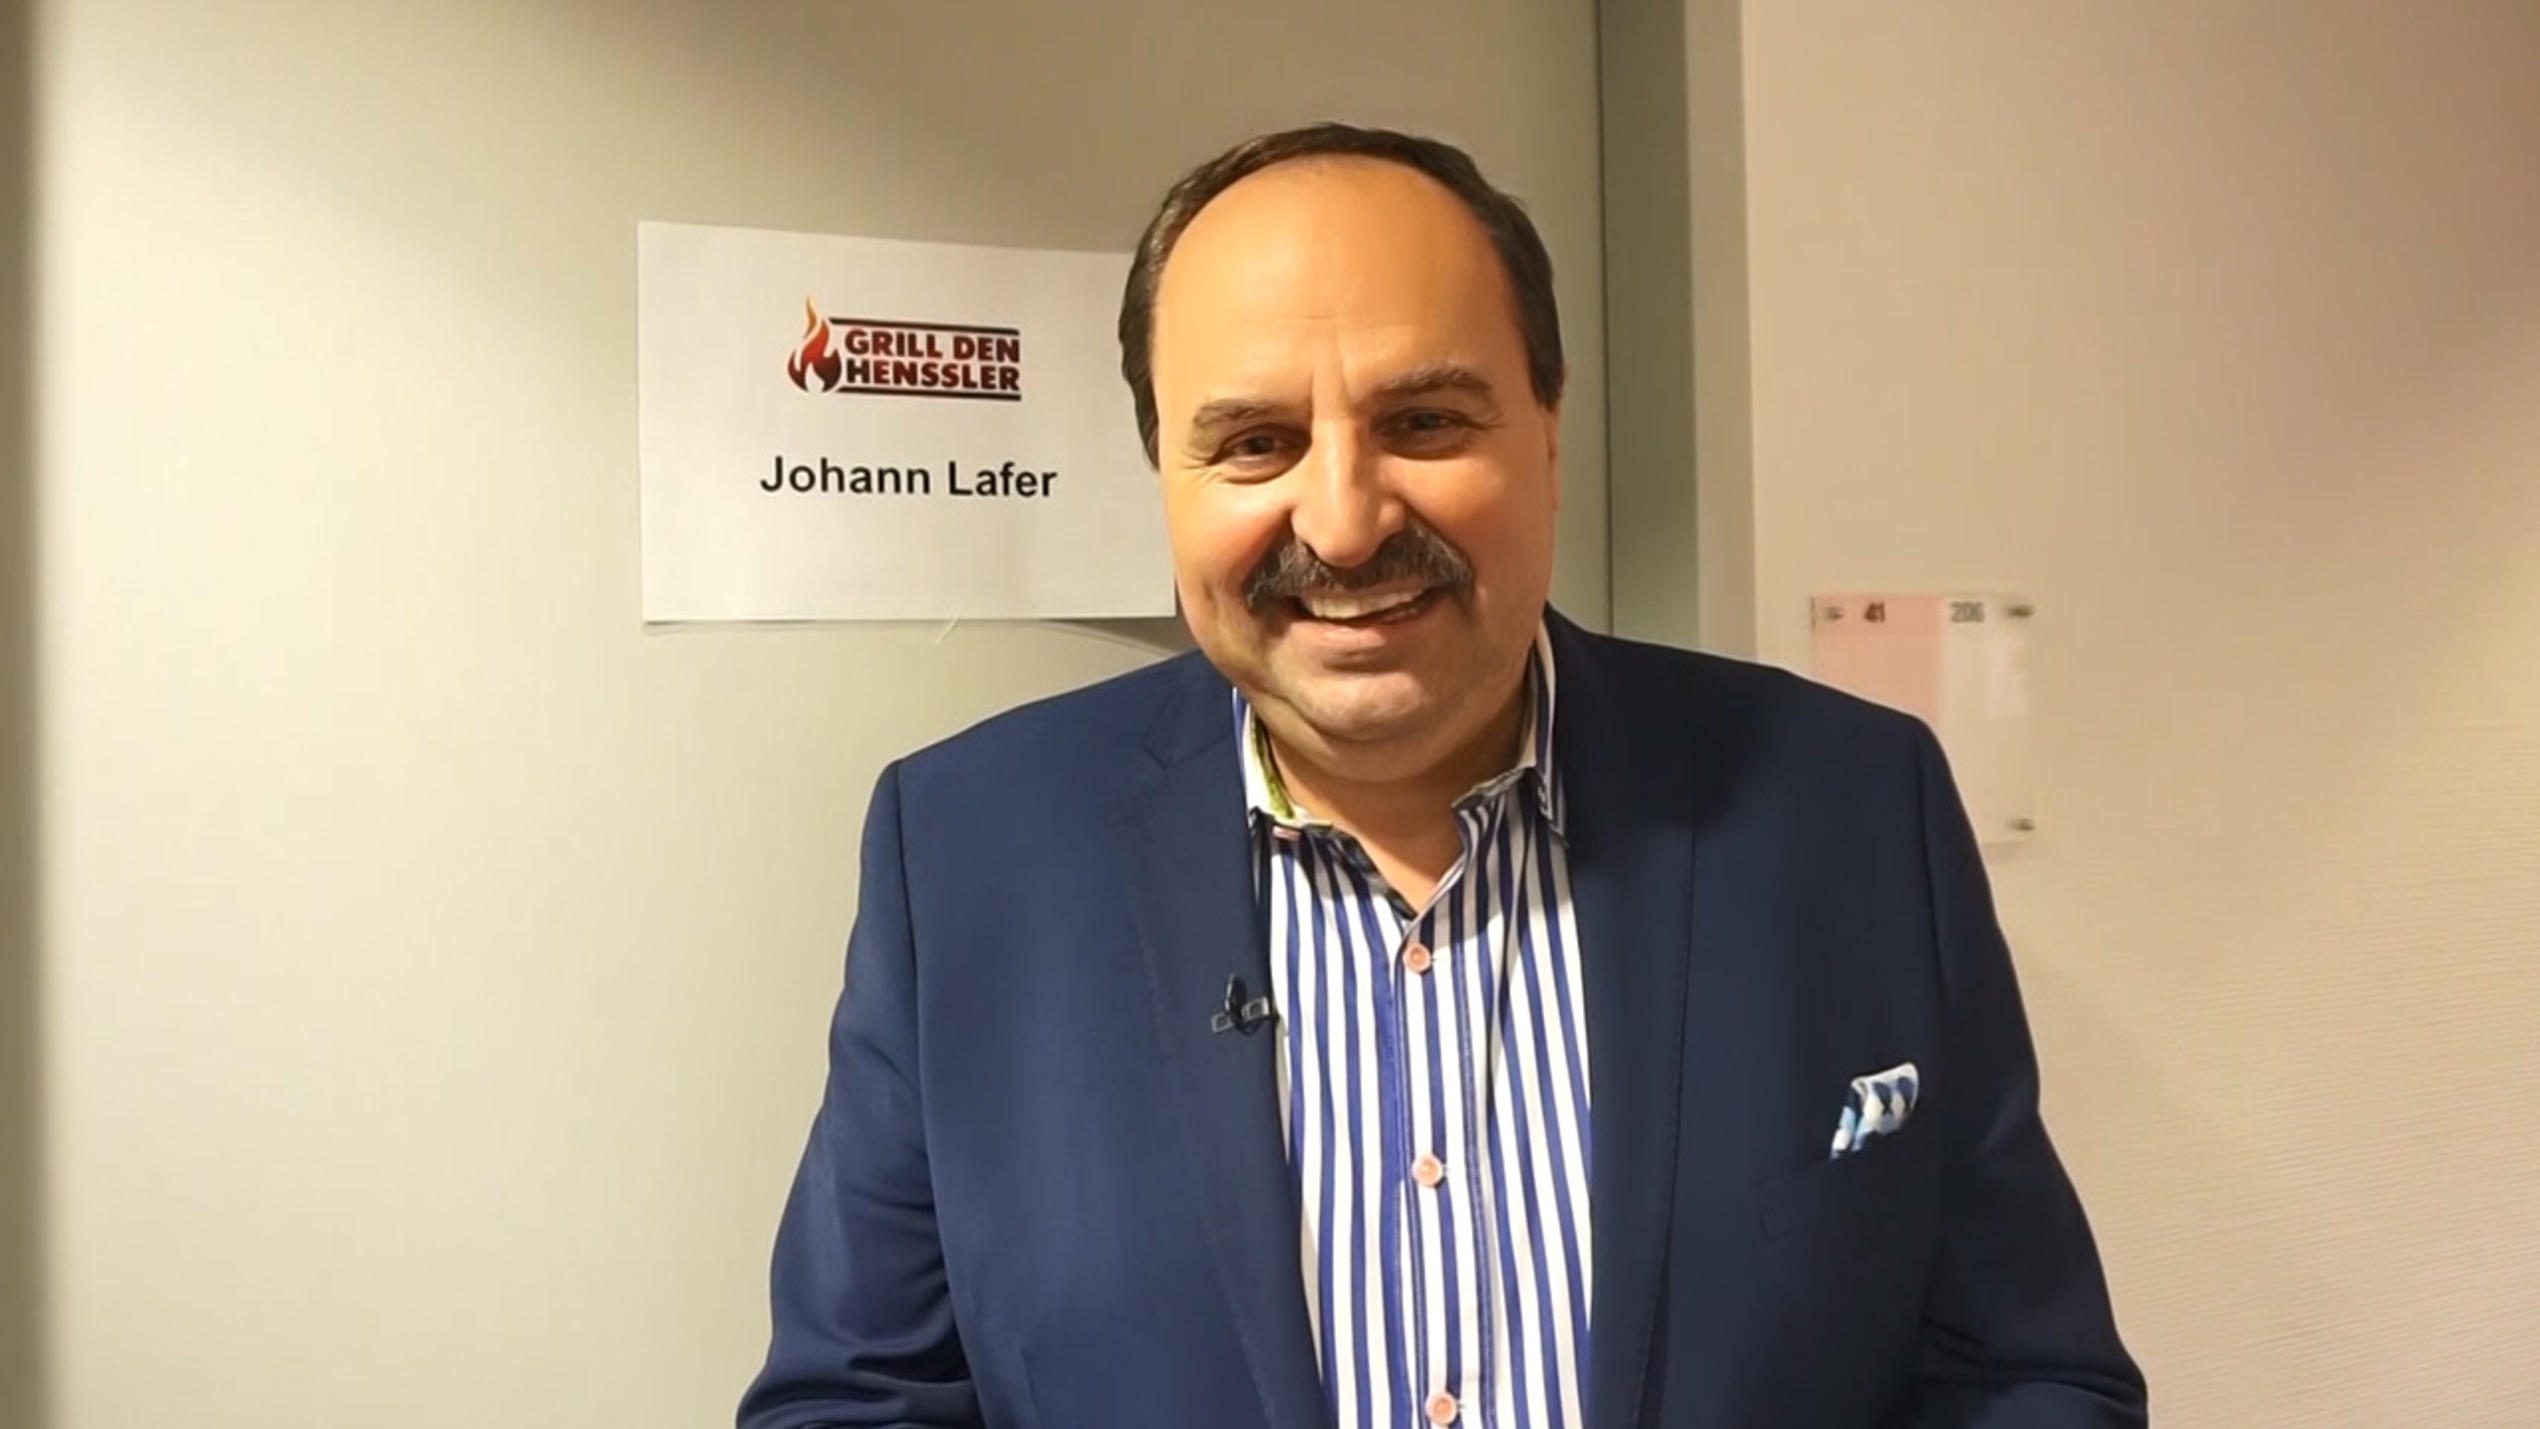 Johann Lafer: "Ich möchte lecker essen"